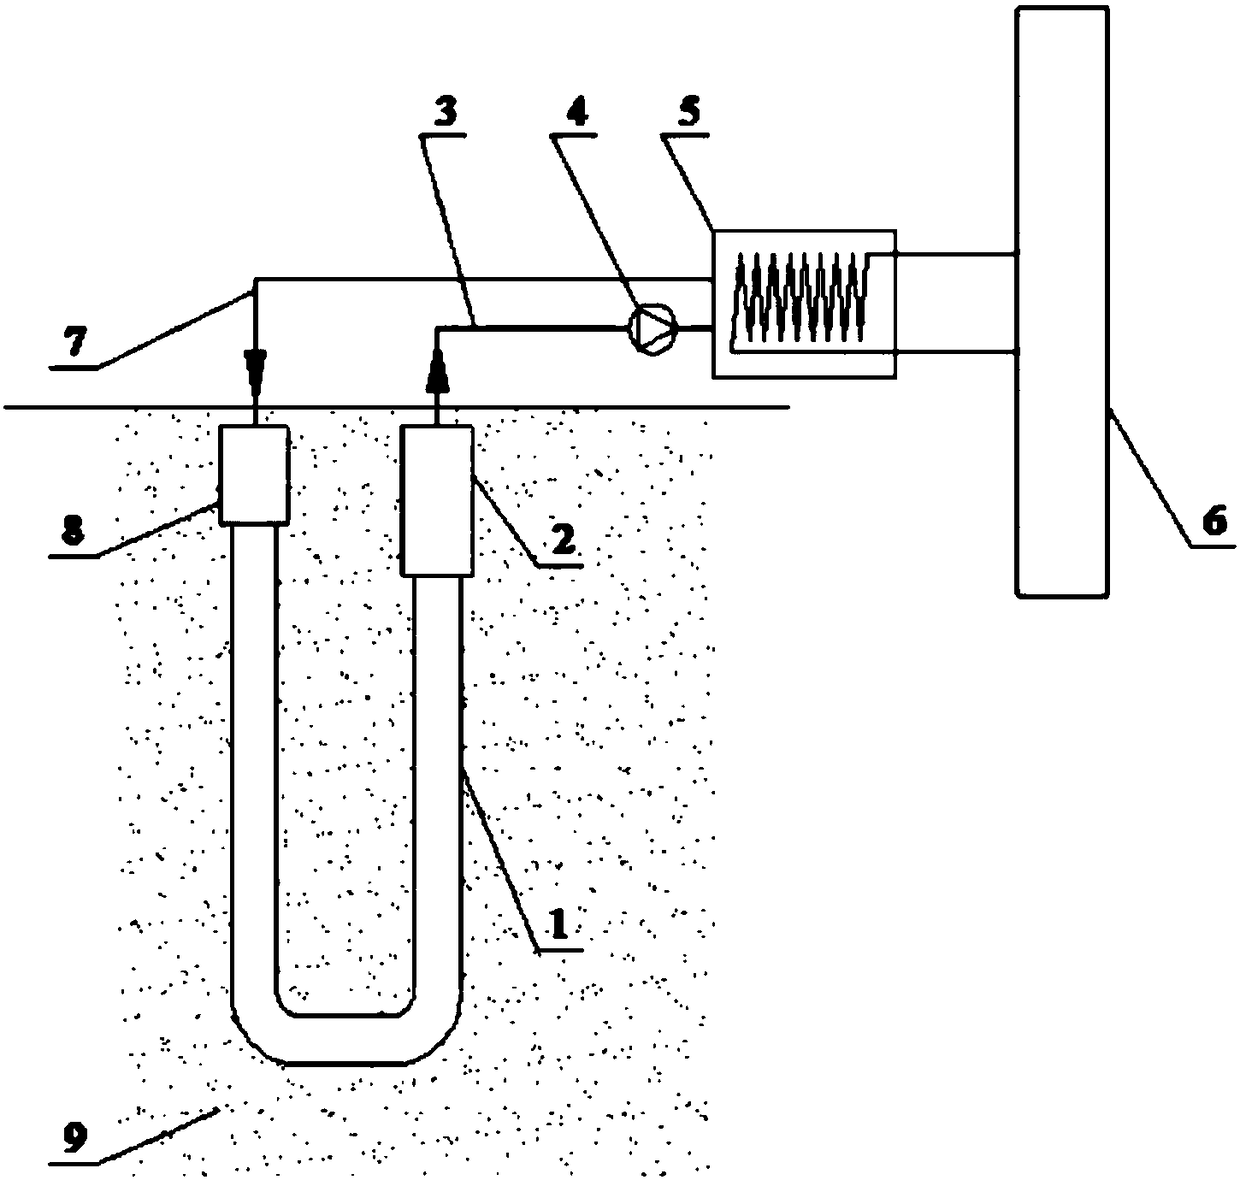 Geothermal energy heat exchange device